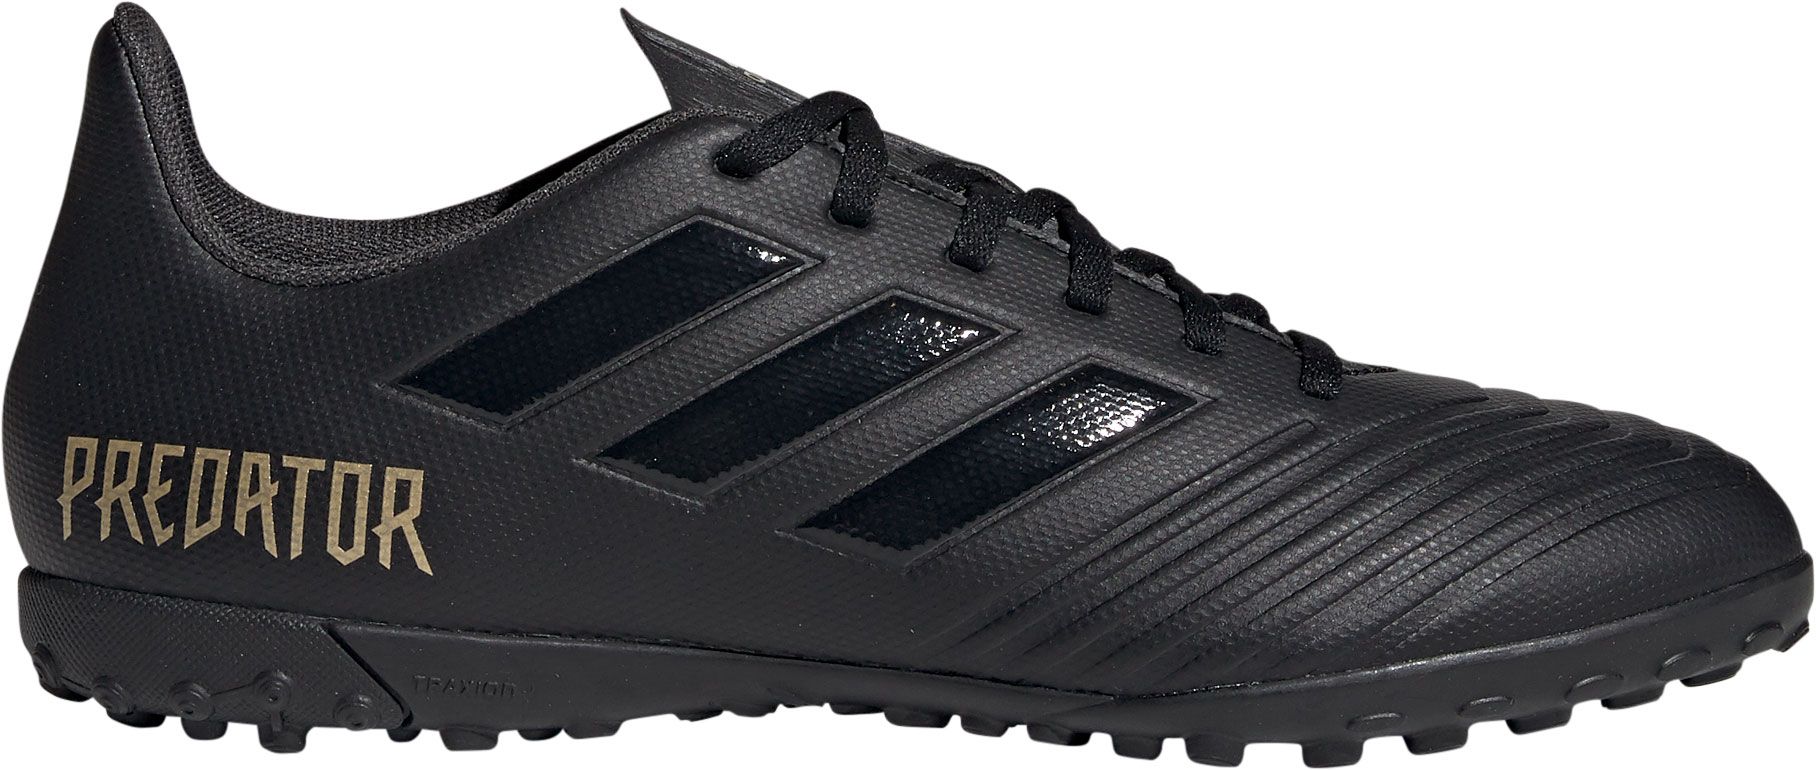 adidas turf soccer shoes mens